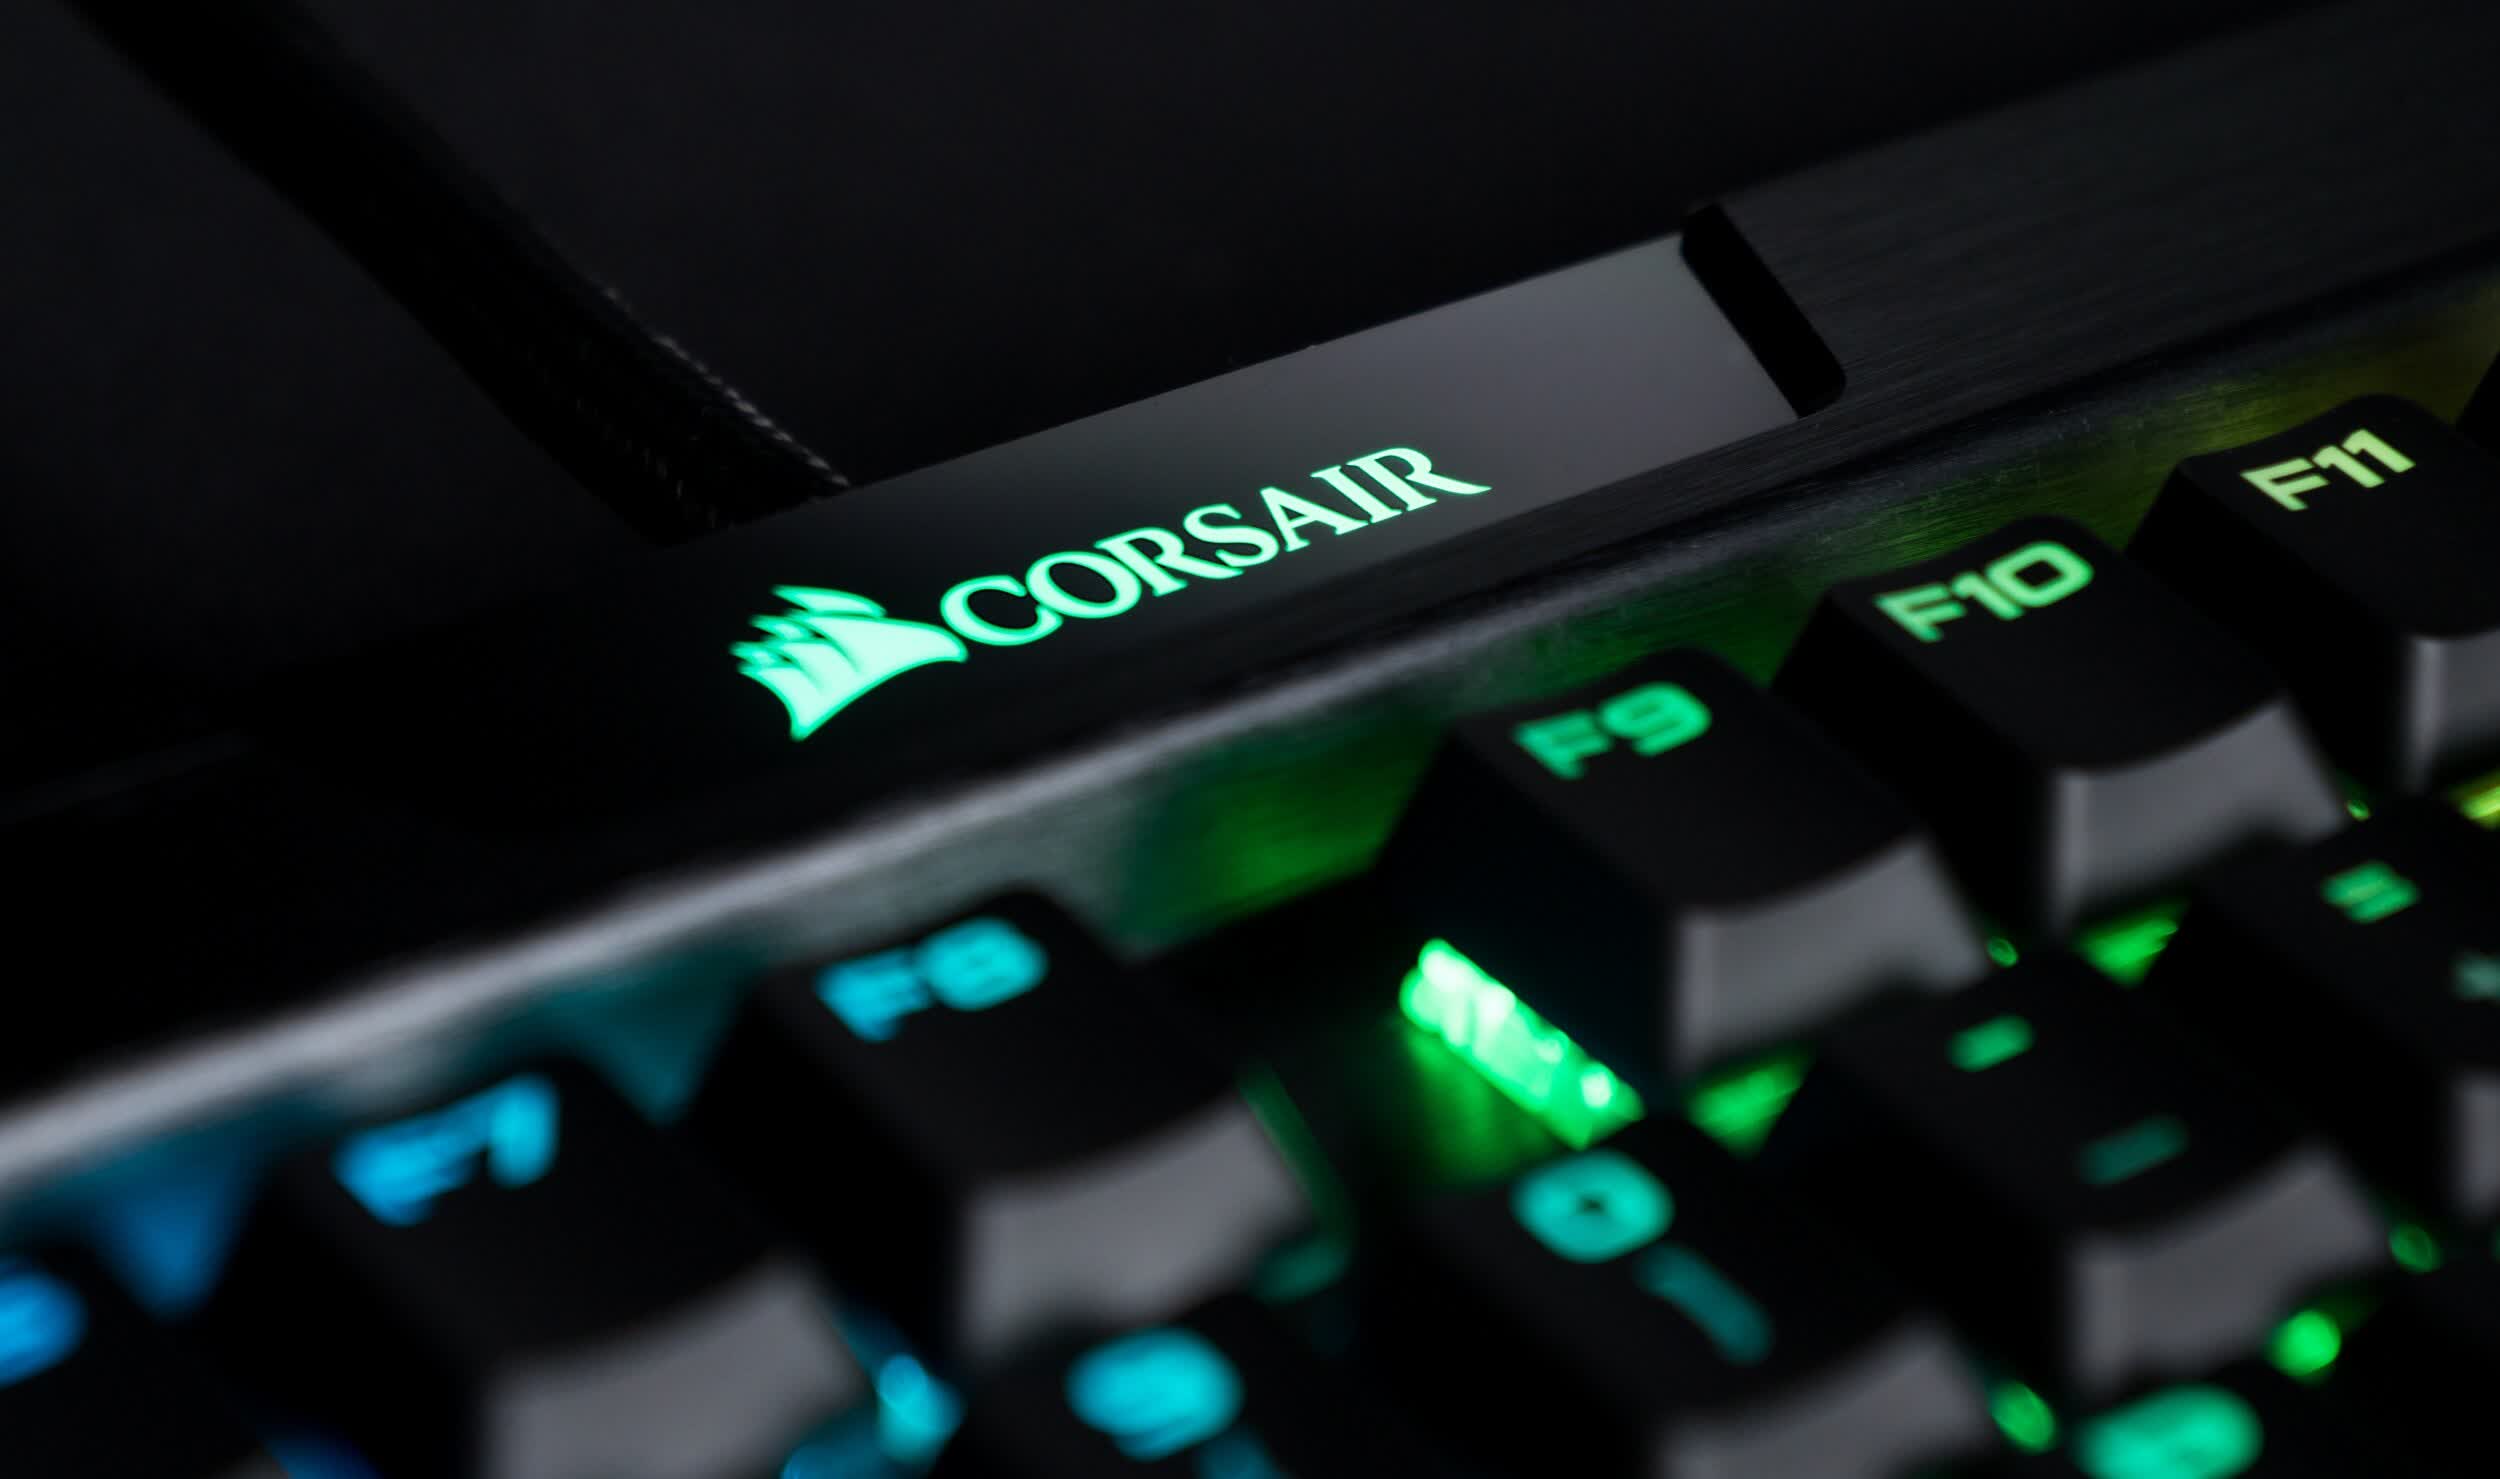 Corsair aims to raise $100 million with IPO